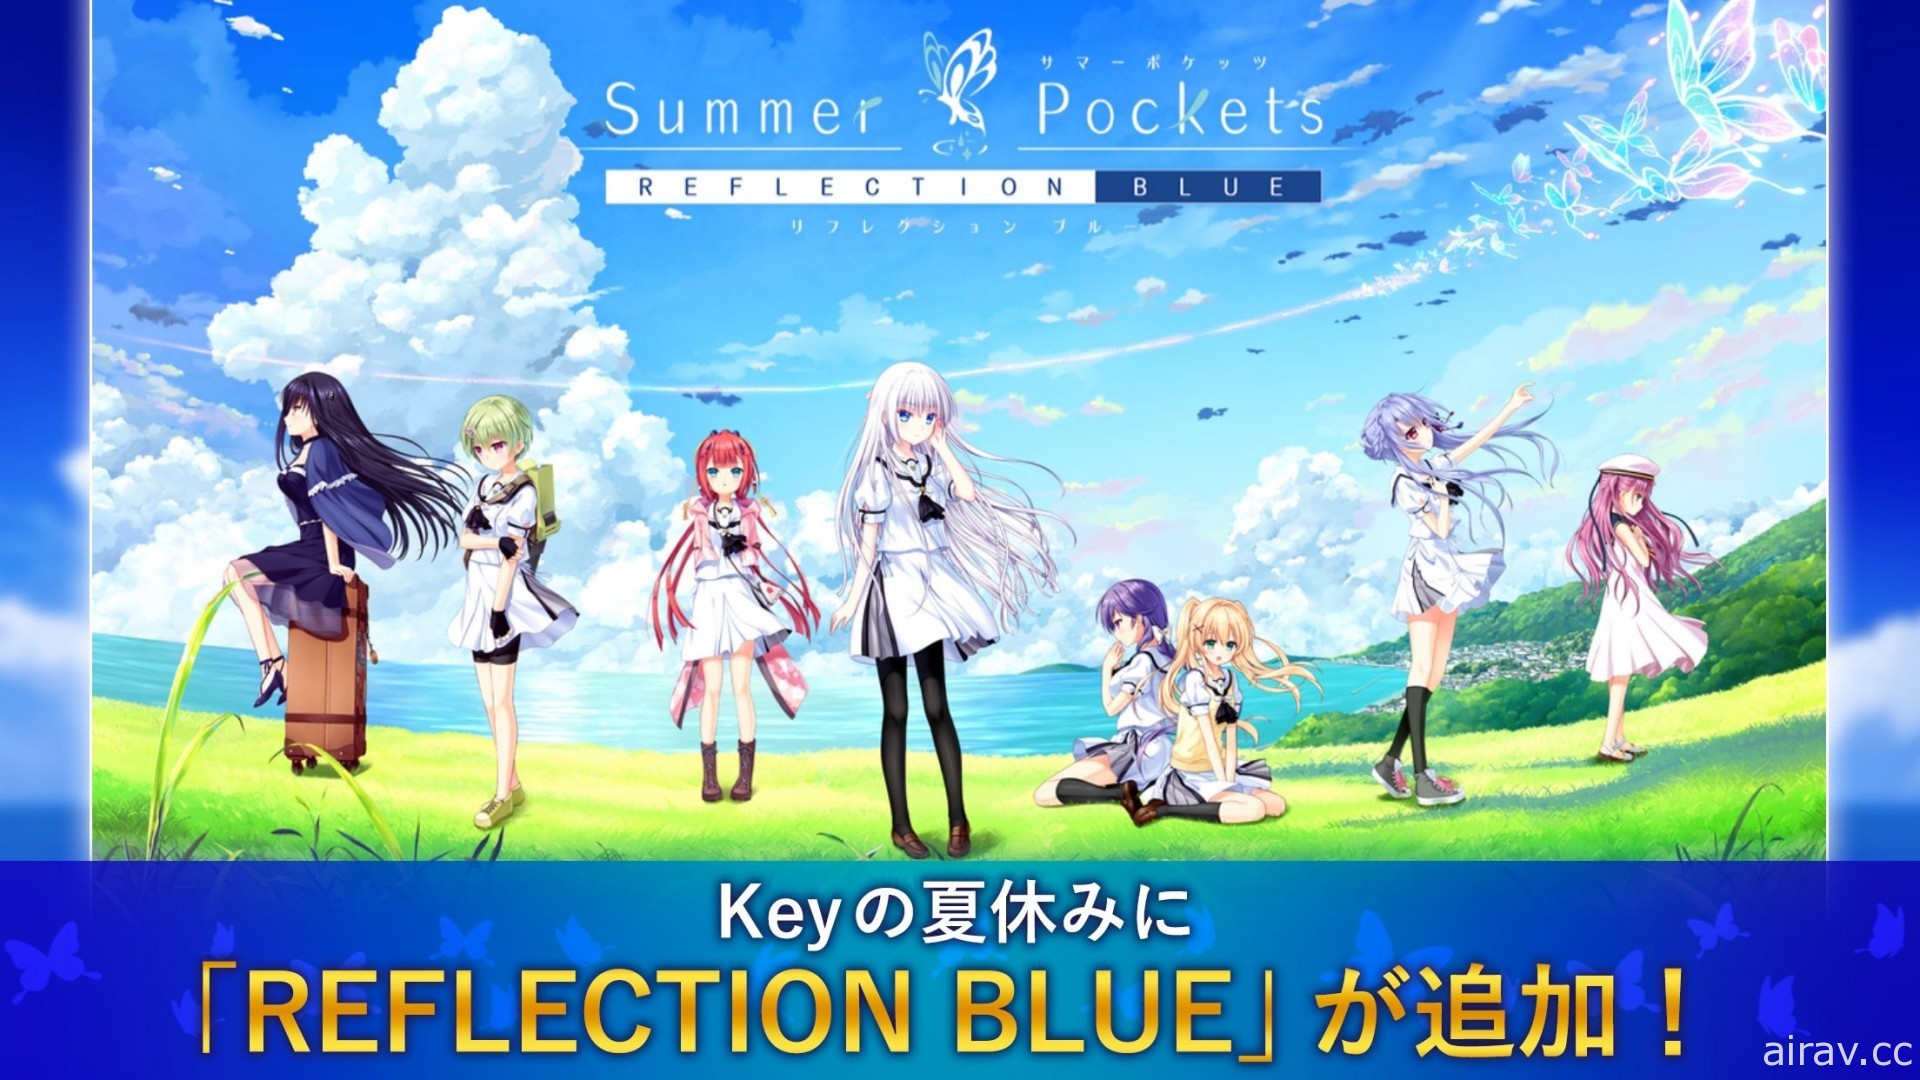 《Summer Pockets REFLECTION BLUE》於手機平台推出 追加新女主角及路線